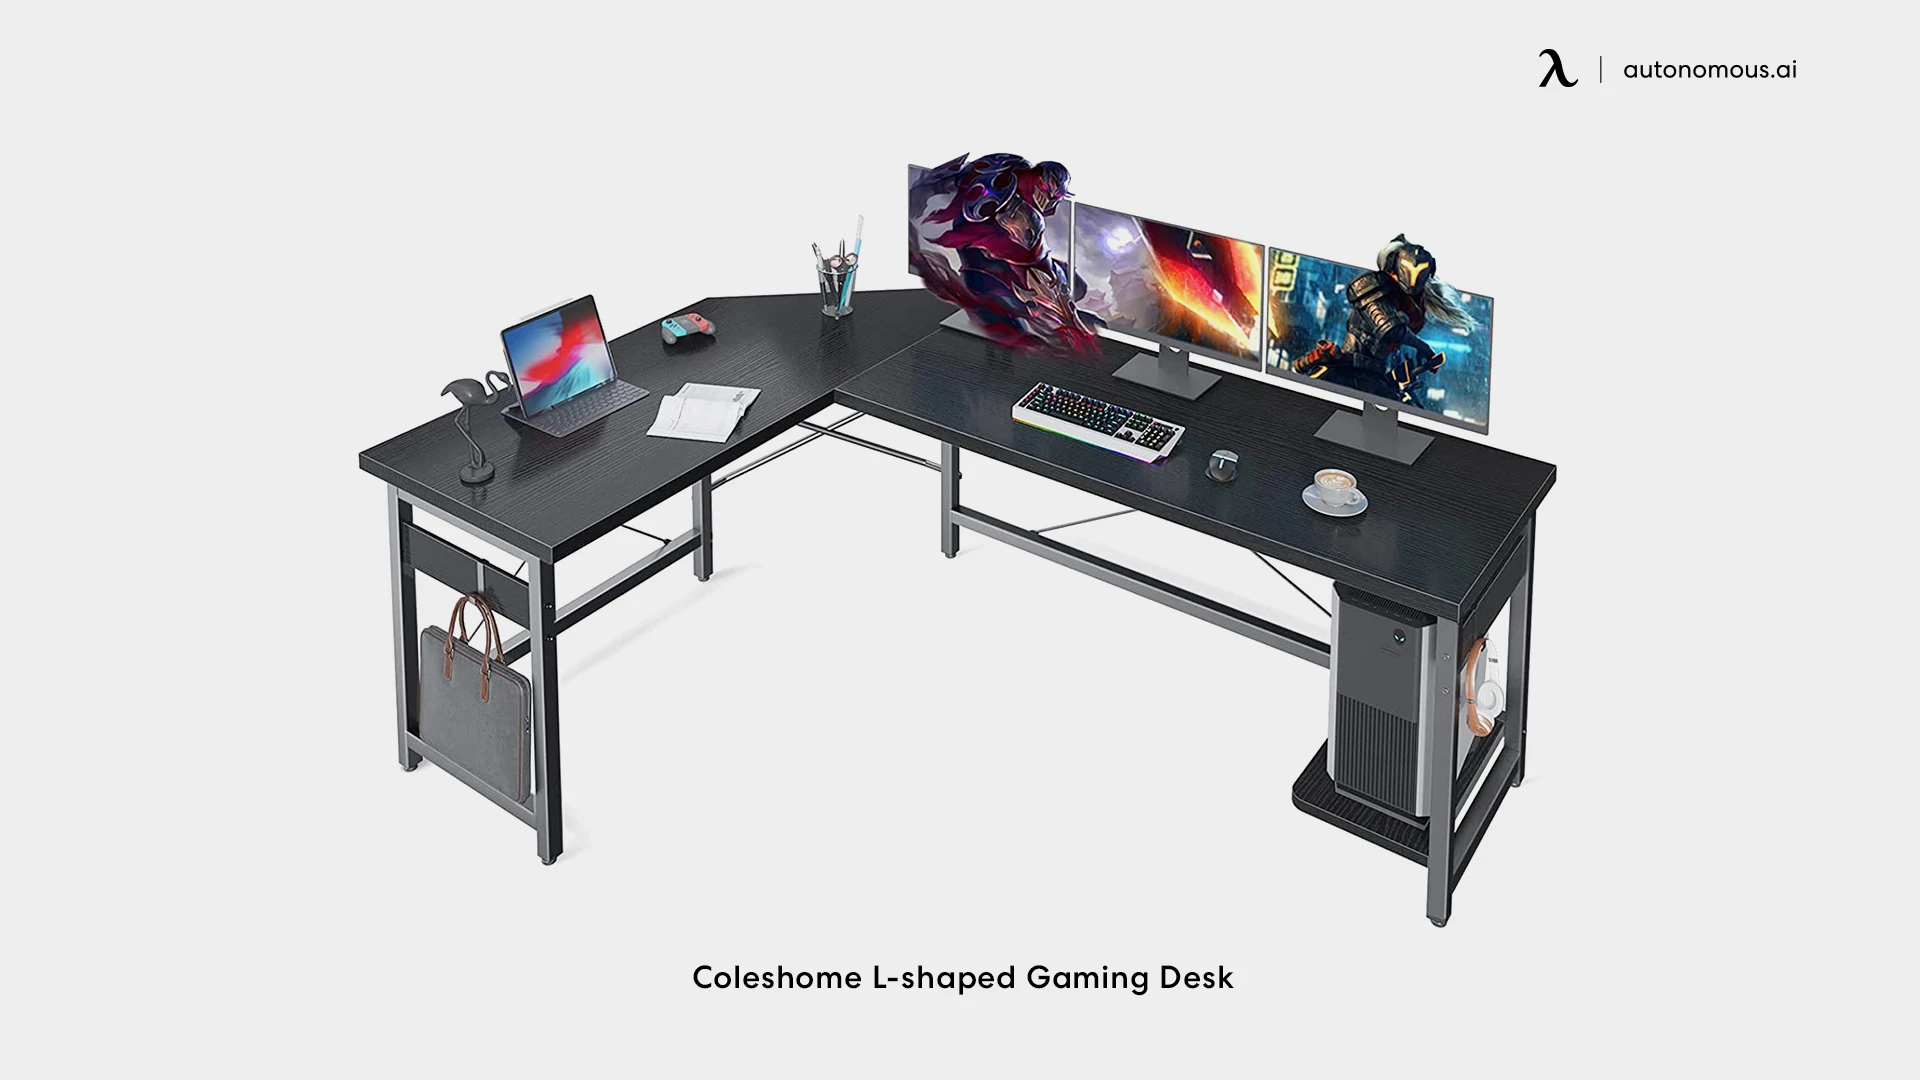 Coleshome L-shaped Gaming Desk